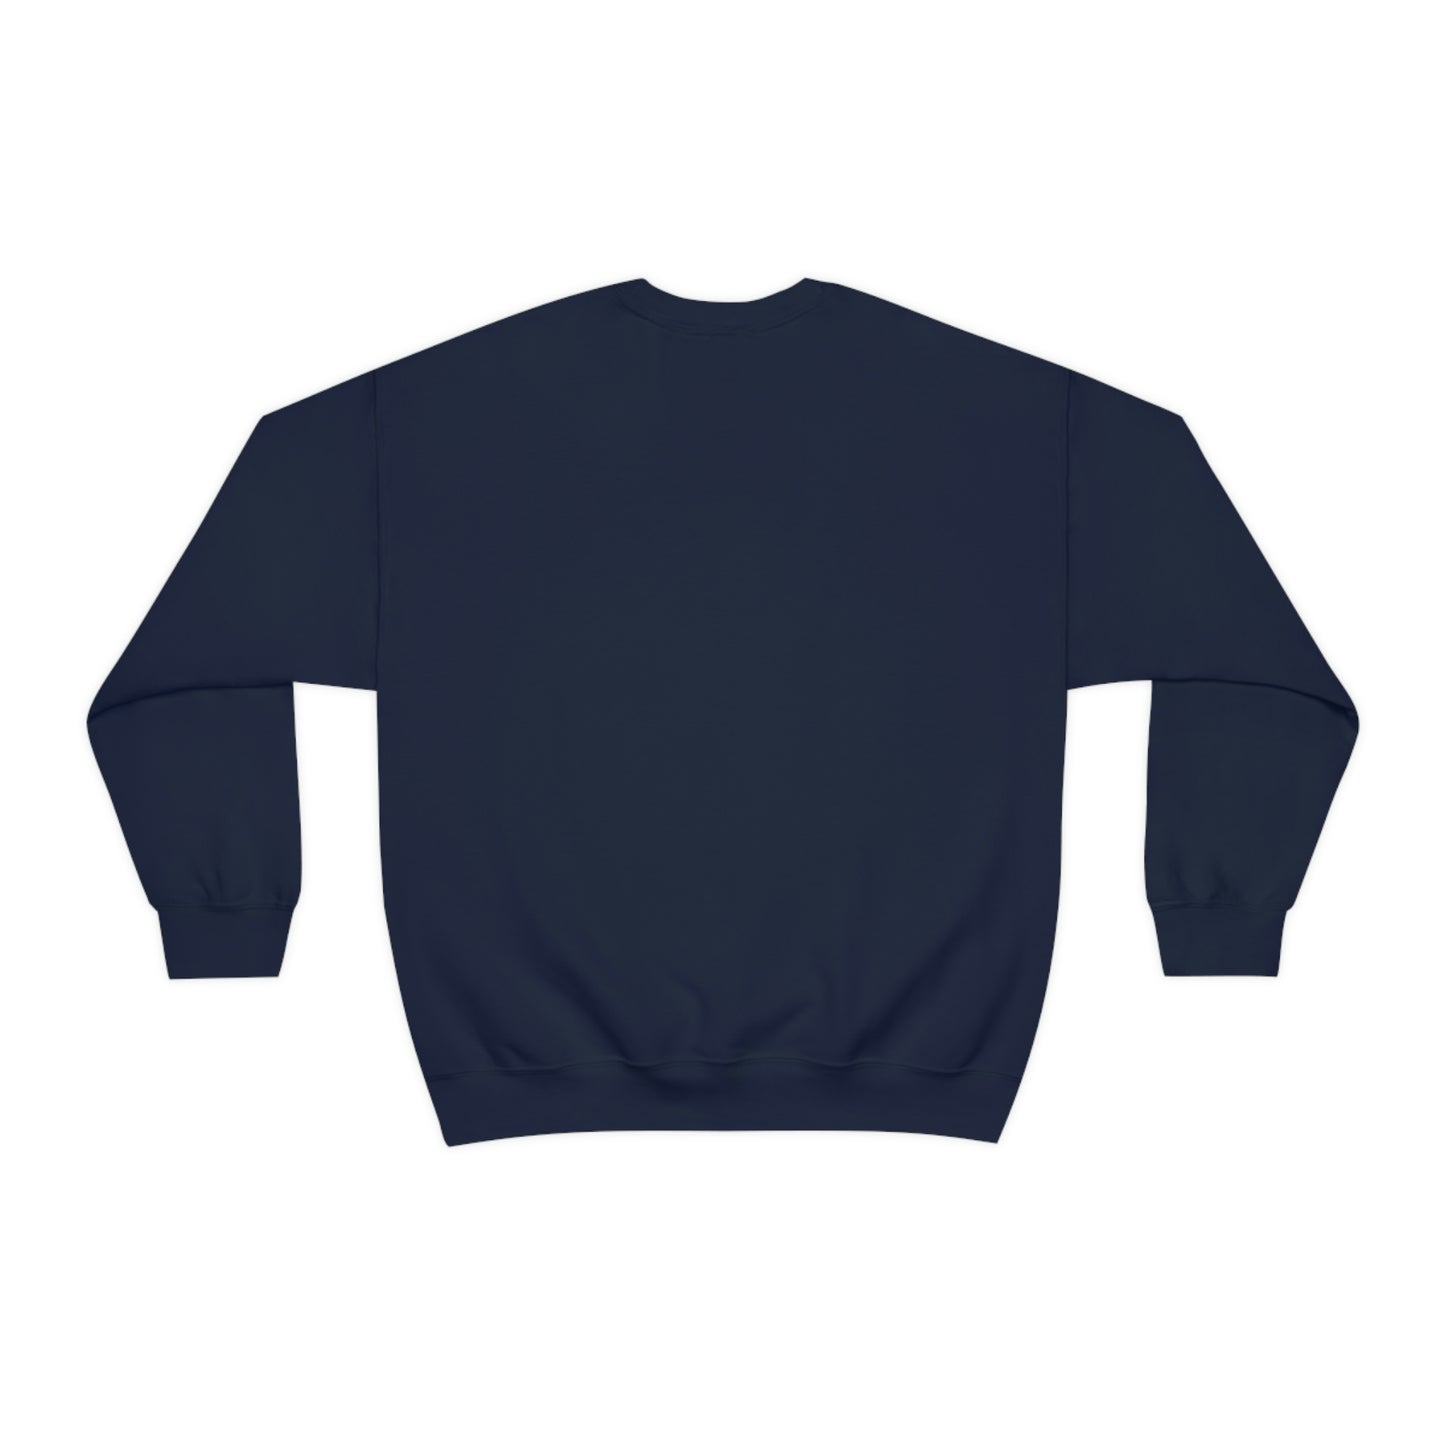 I need attention - Unisex Heavy Blend™ Crewneck Sweatshirt